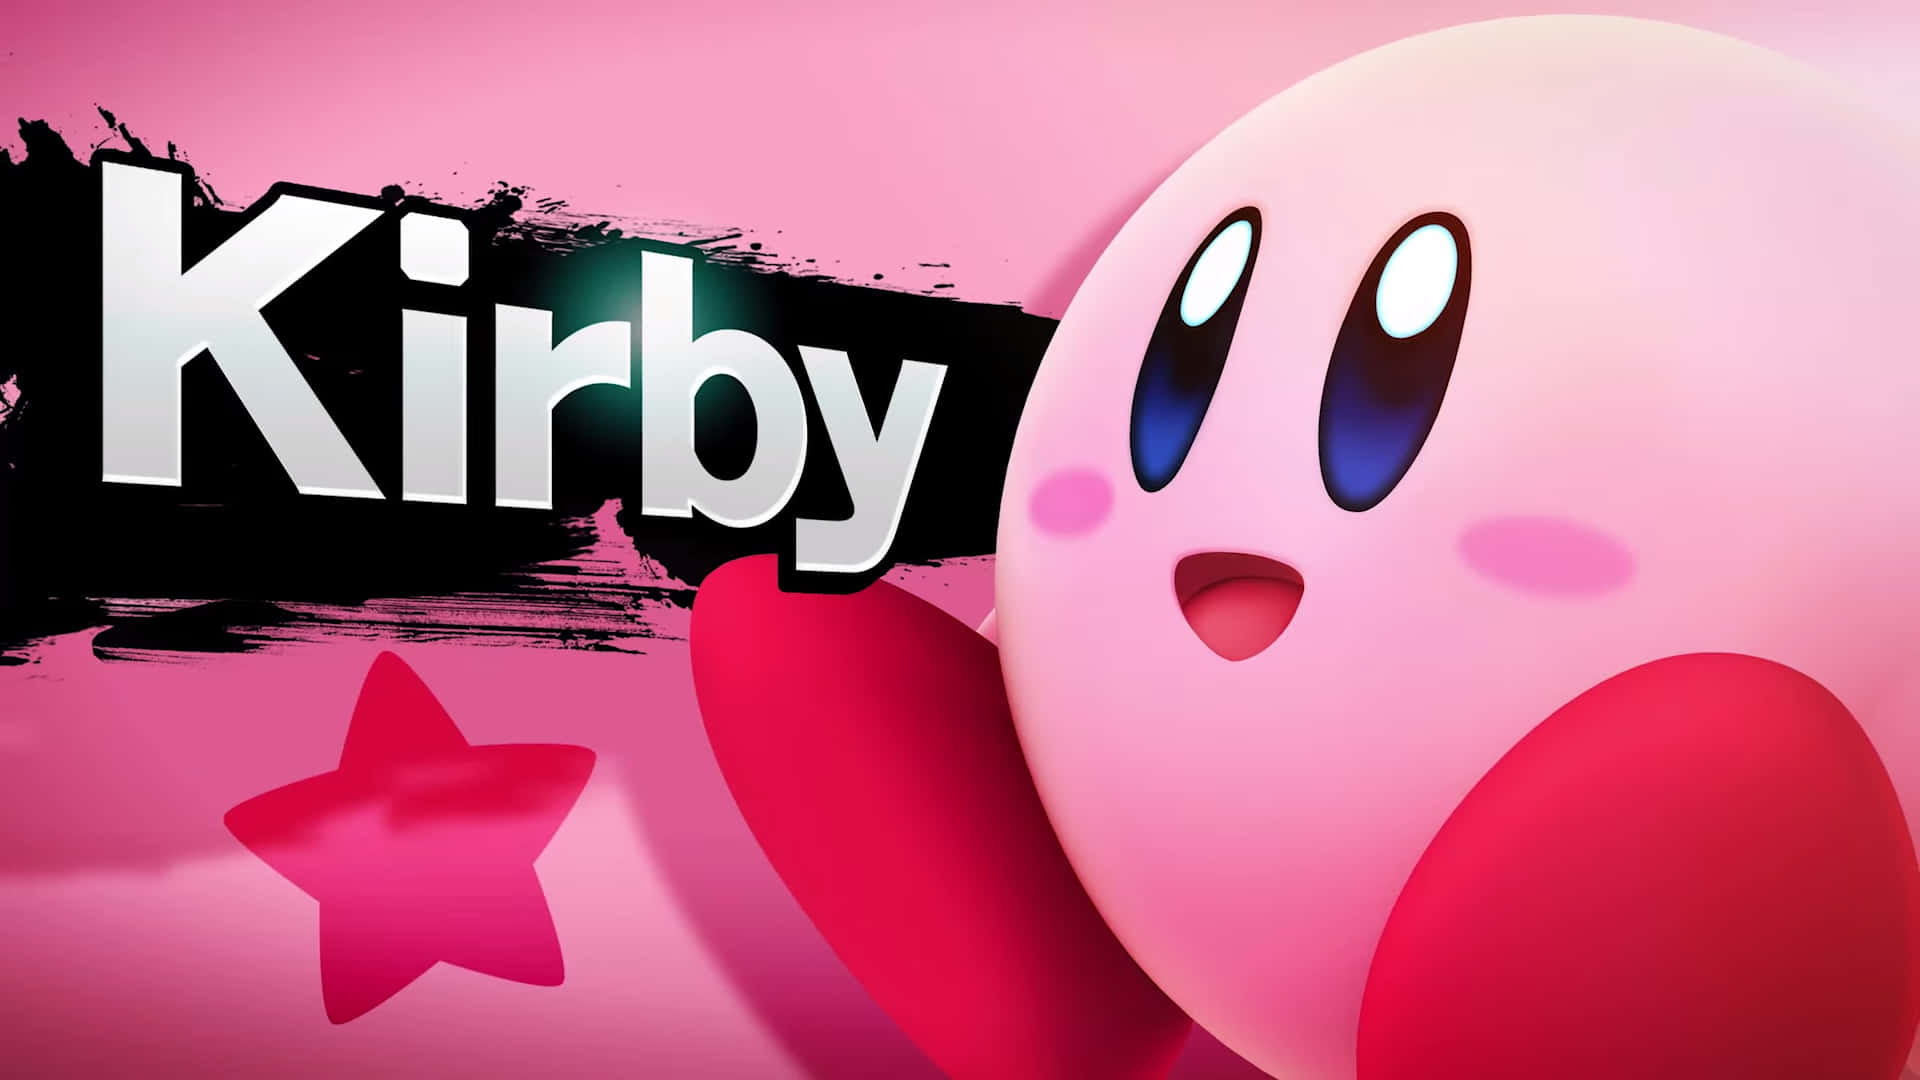 Enjoy the adventures of Kirby